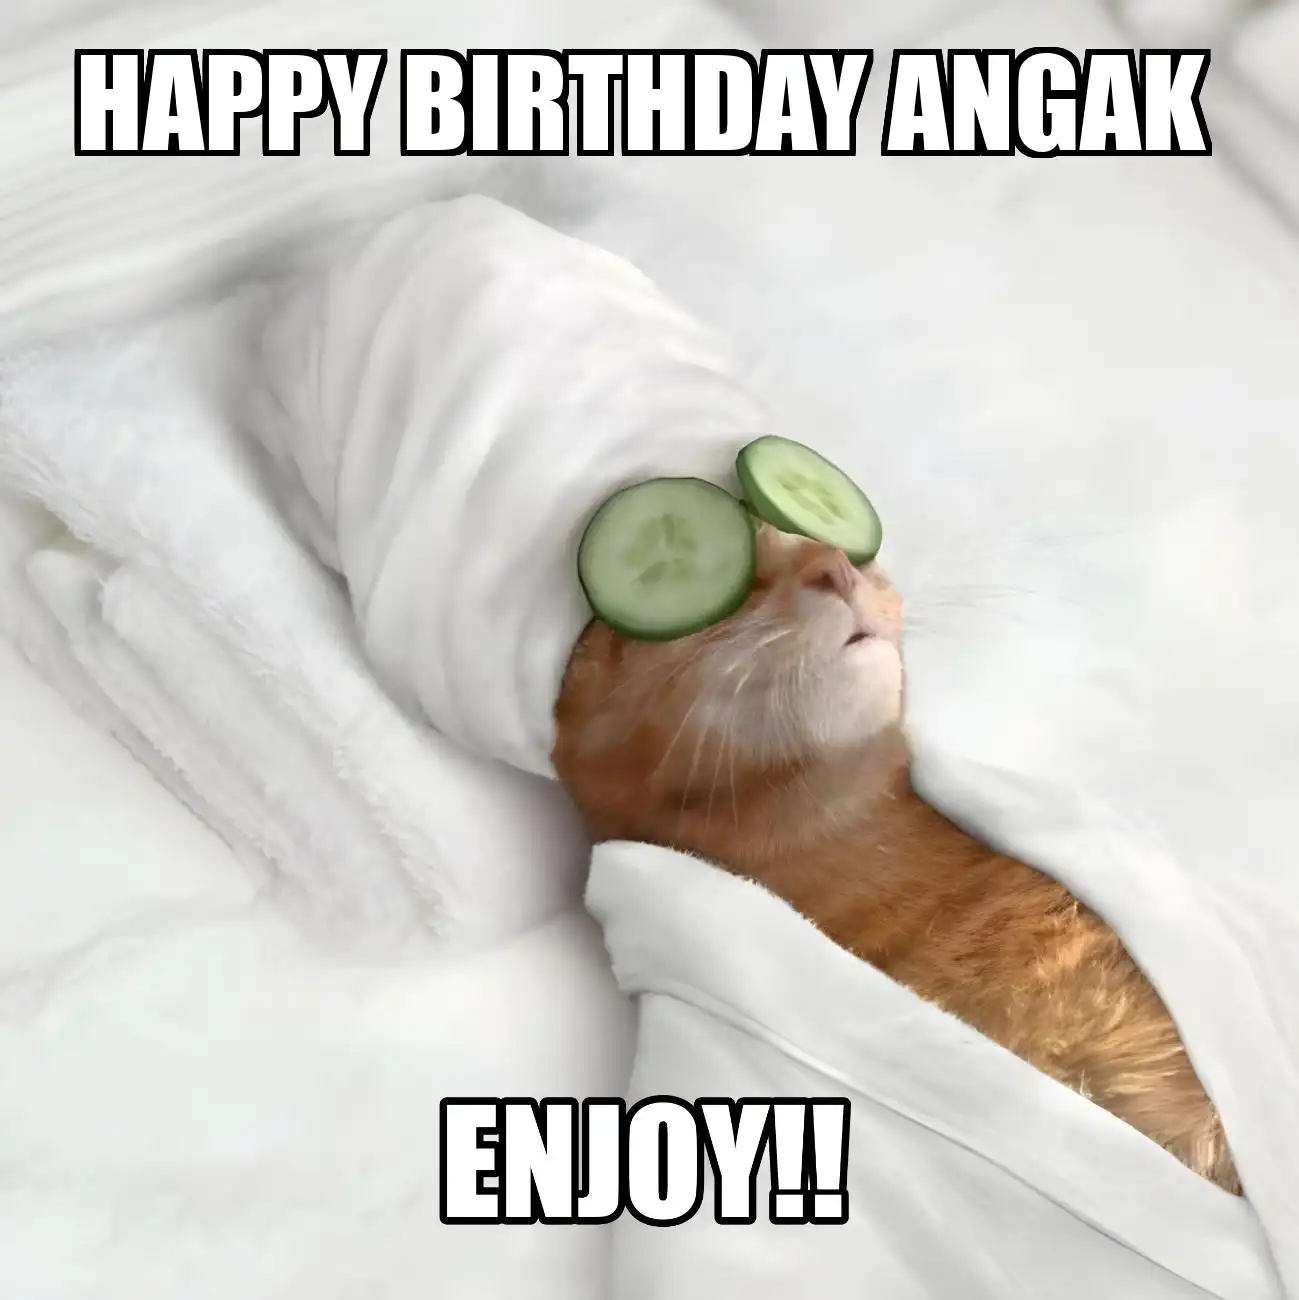 Happy Birthday Angak Enjoy Cat Meme